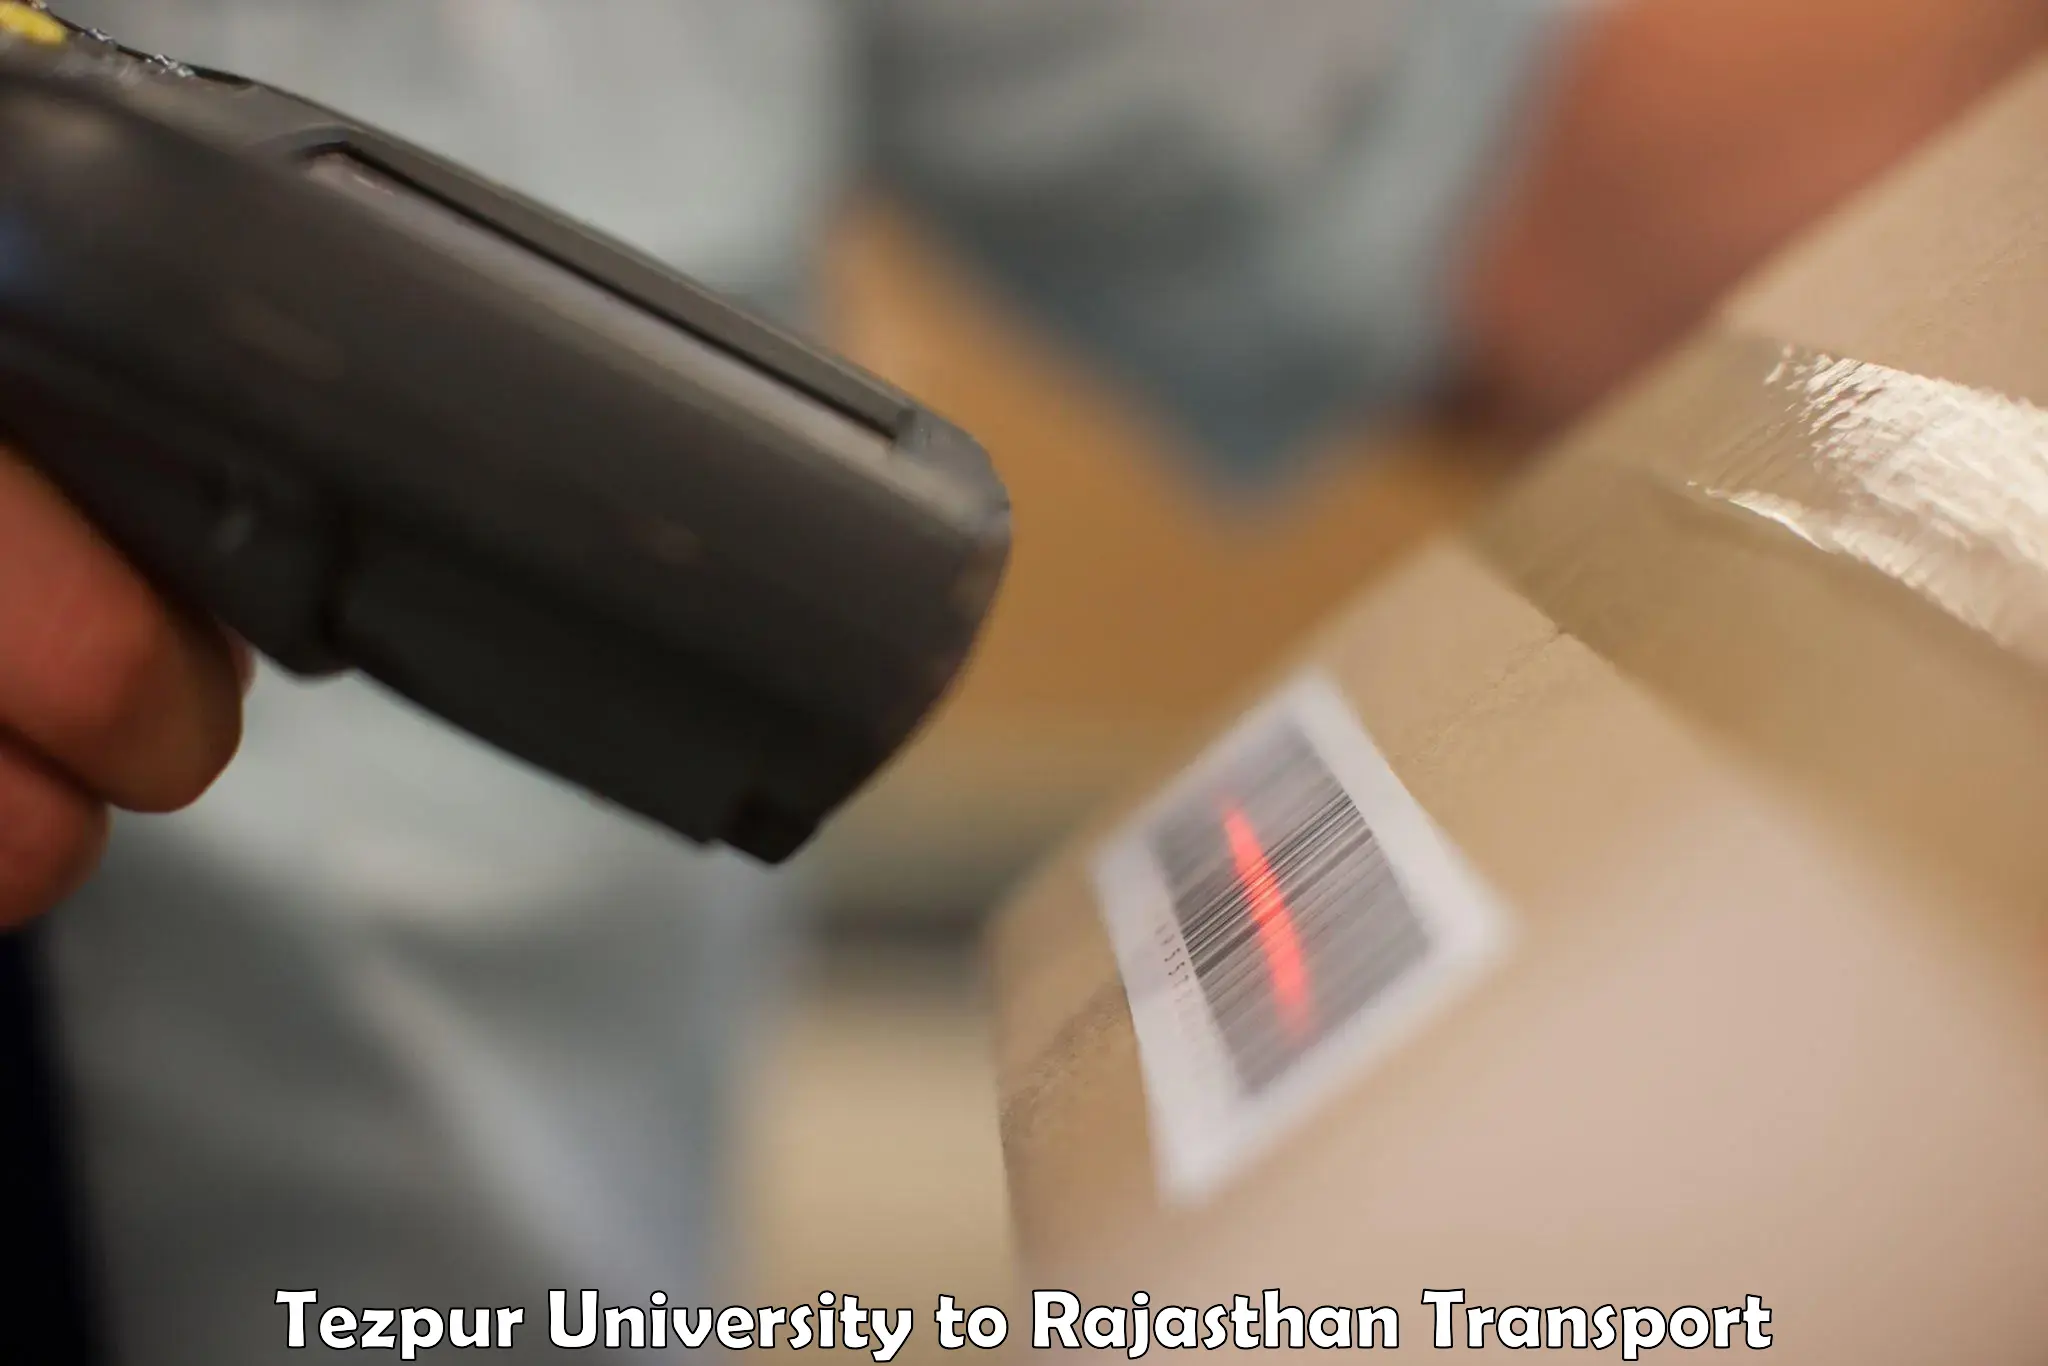 Daily parcel service transport Tezpur University to Bandikui